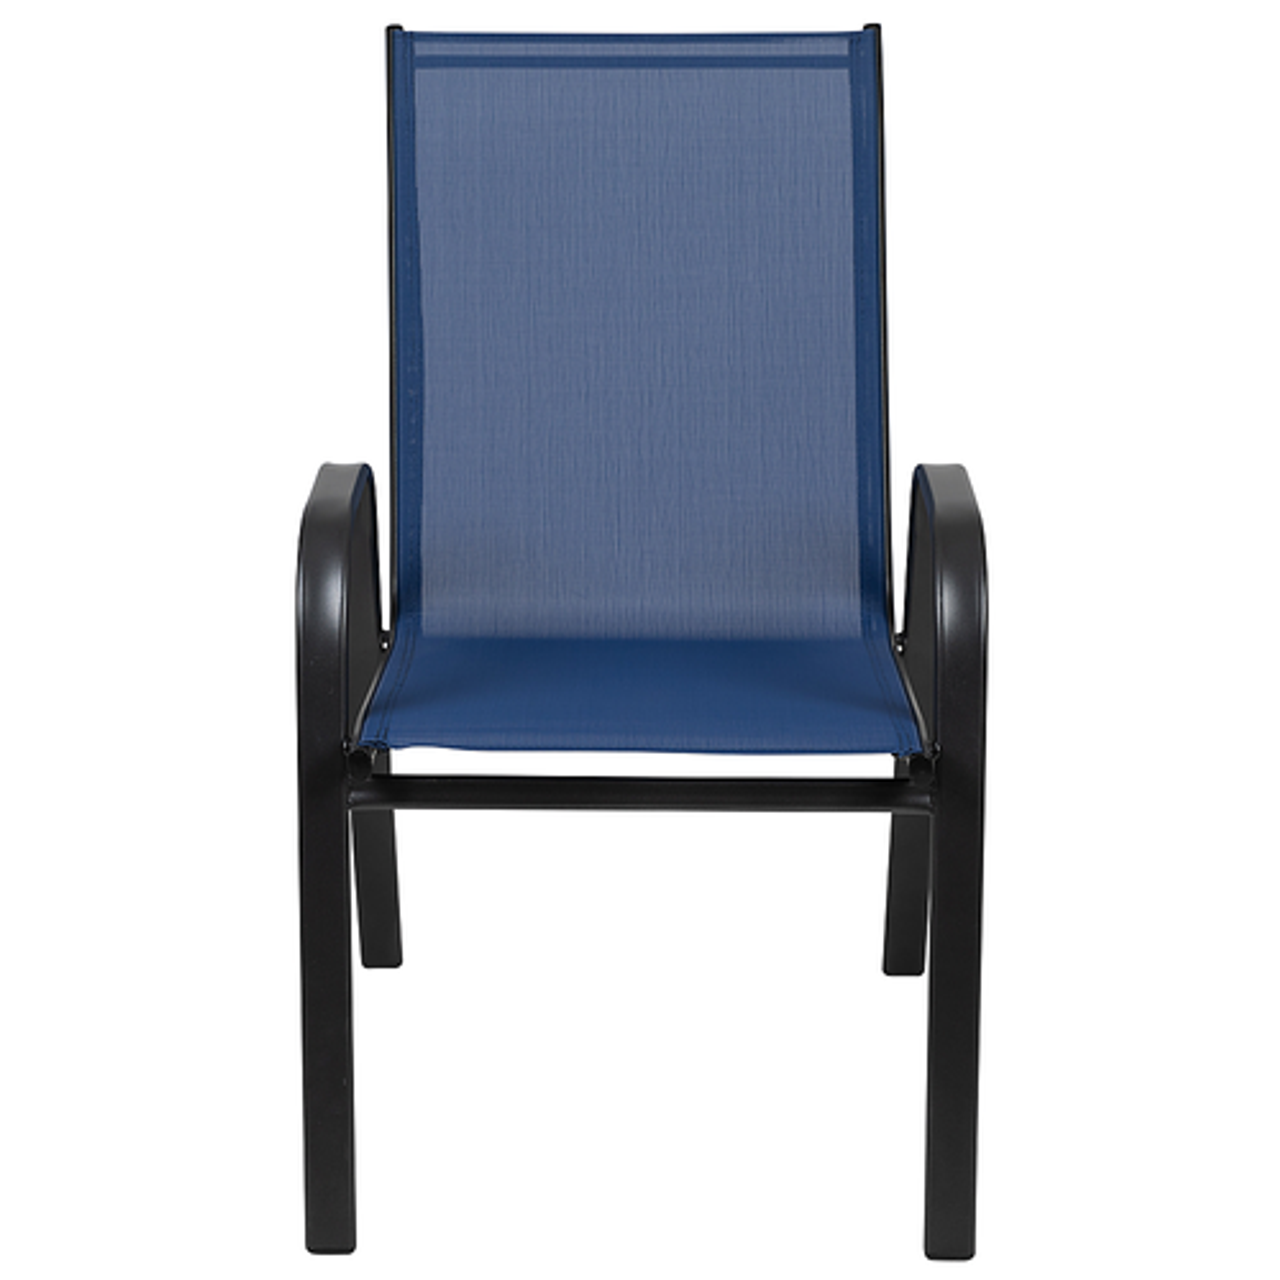 Flash Furniture - Brazos Patio Chair (set of 5) - Navy